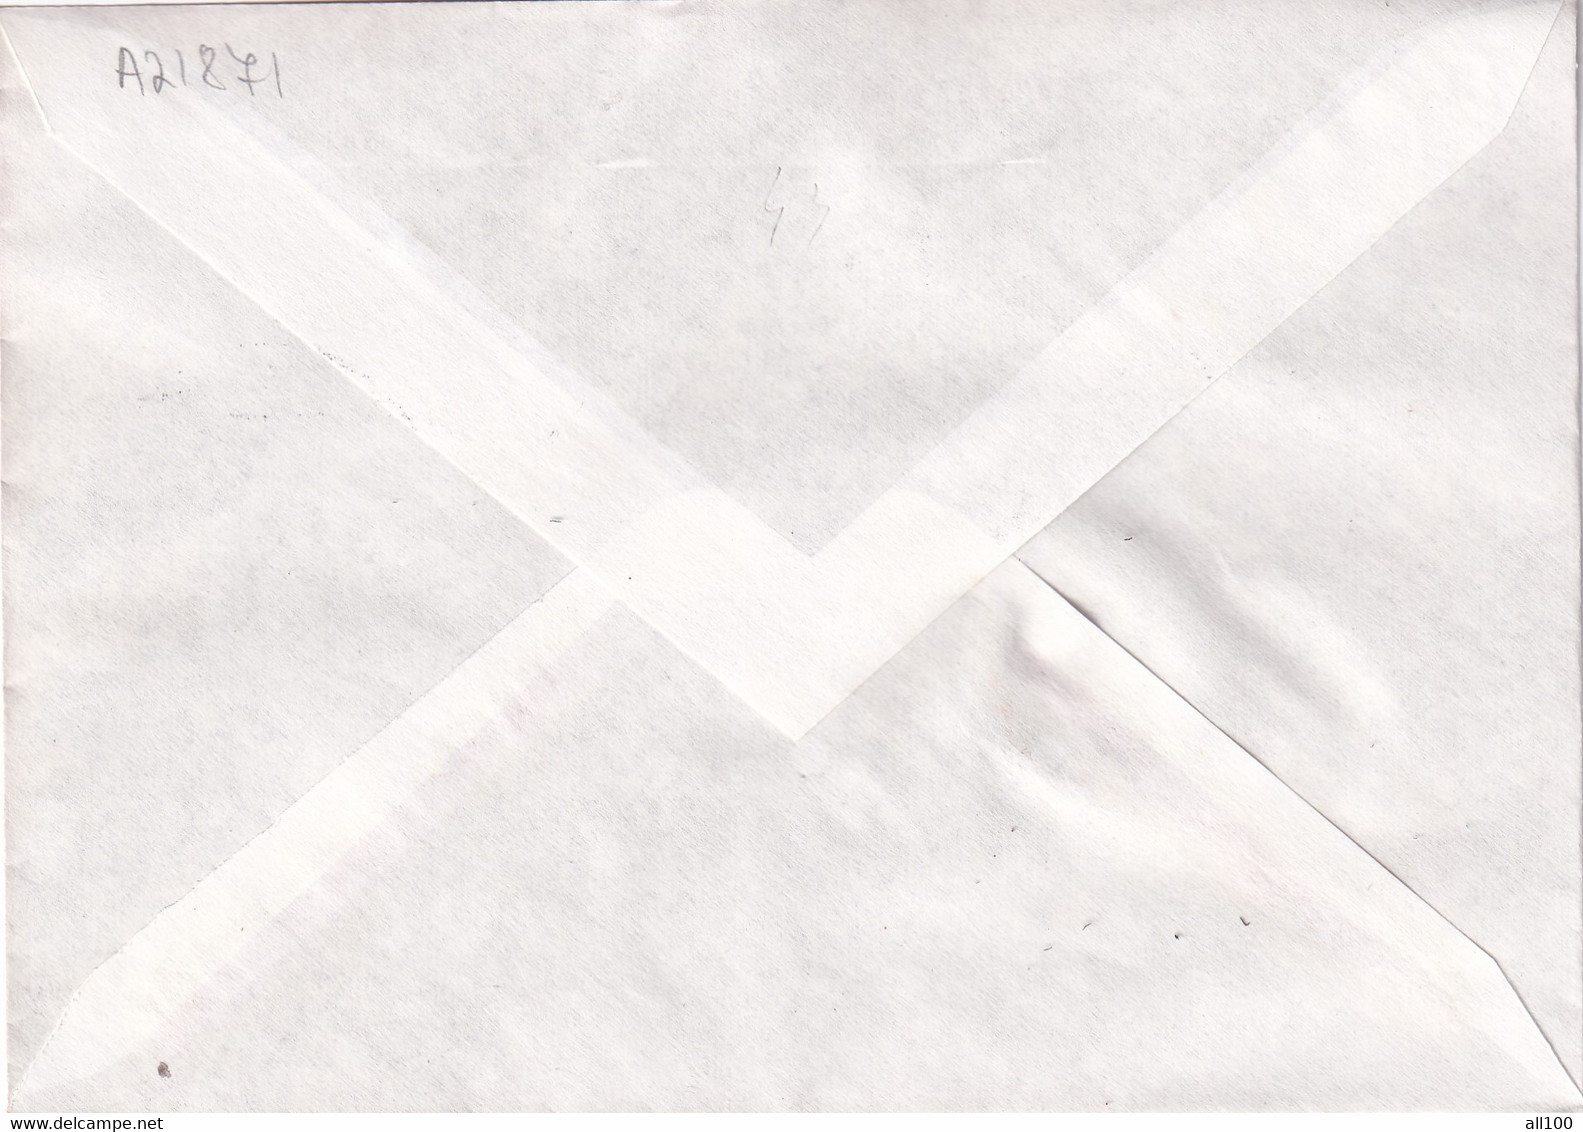 A21871 - Conseil De L'Europe Strasbourg Cover Envelope Unused 1980 Stamp France - Brieven En Documenten